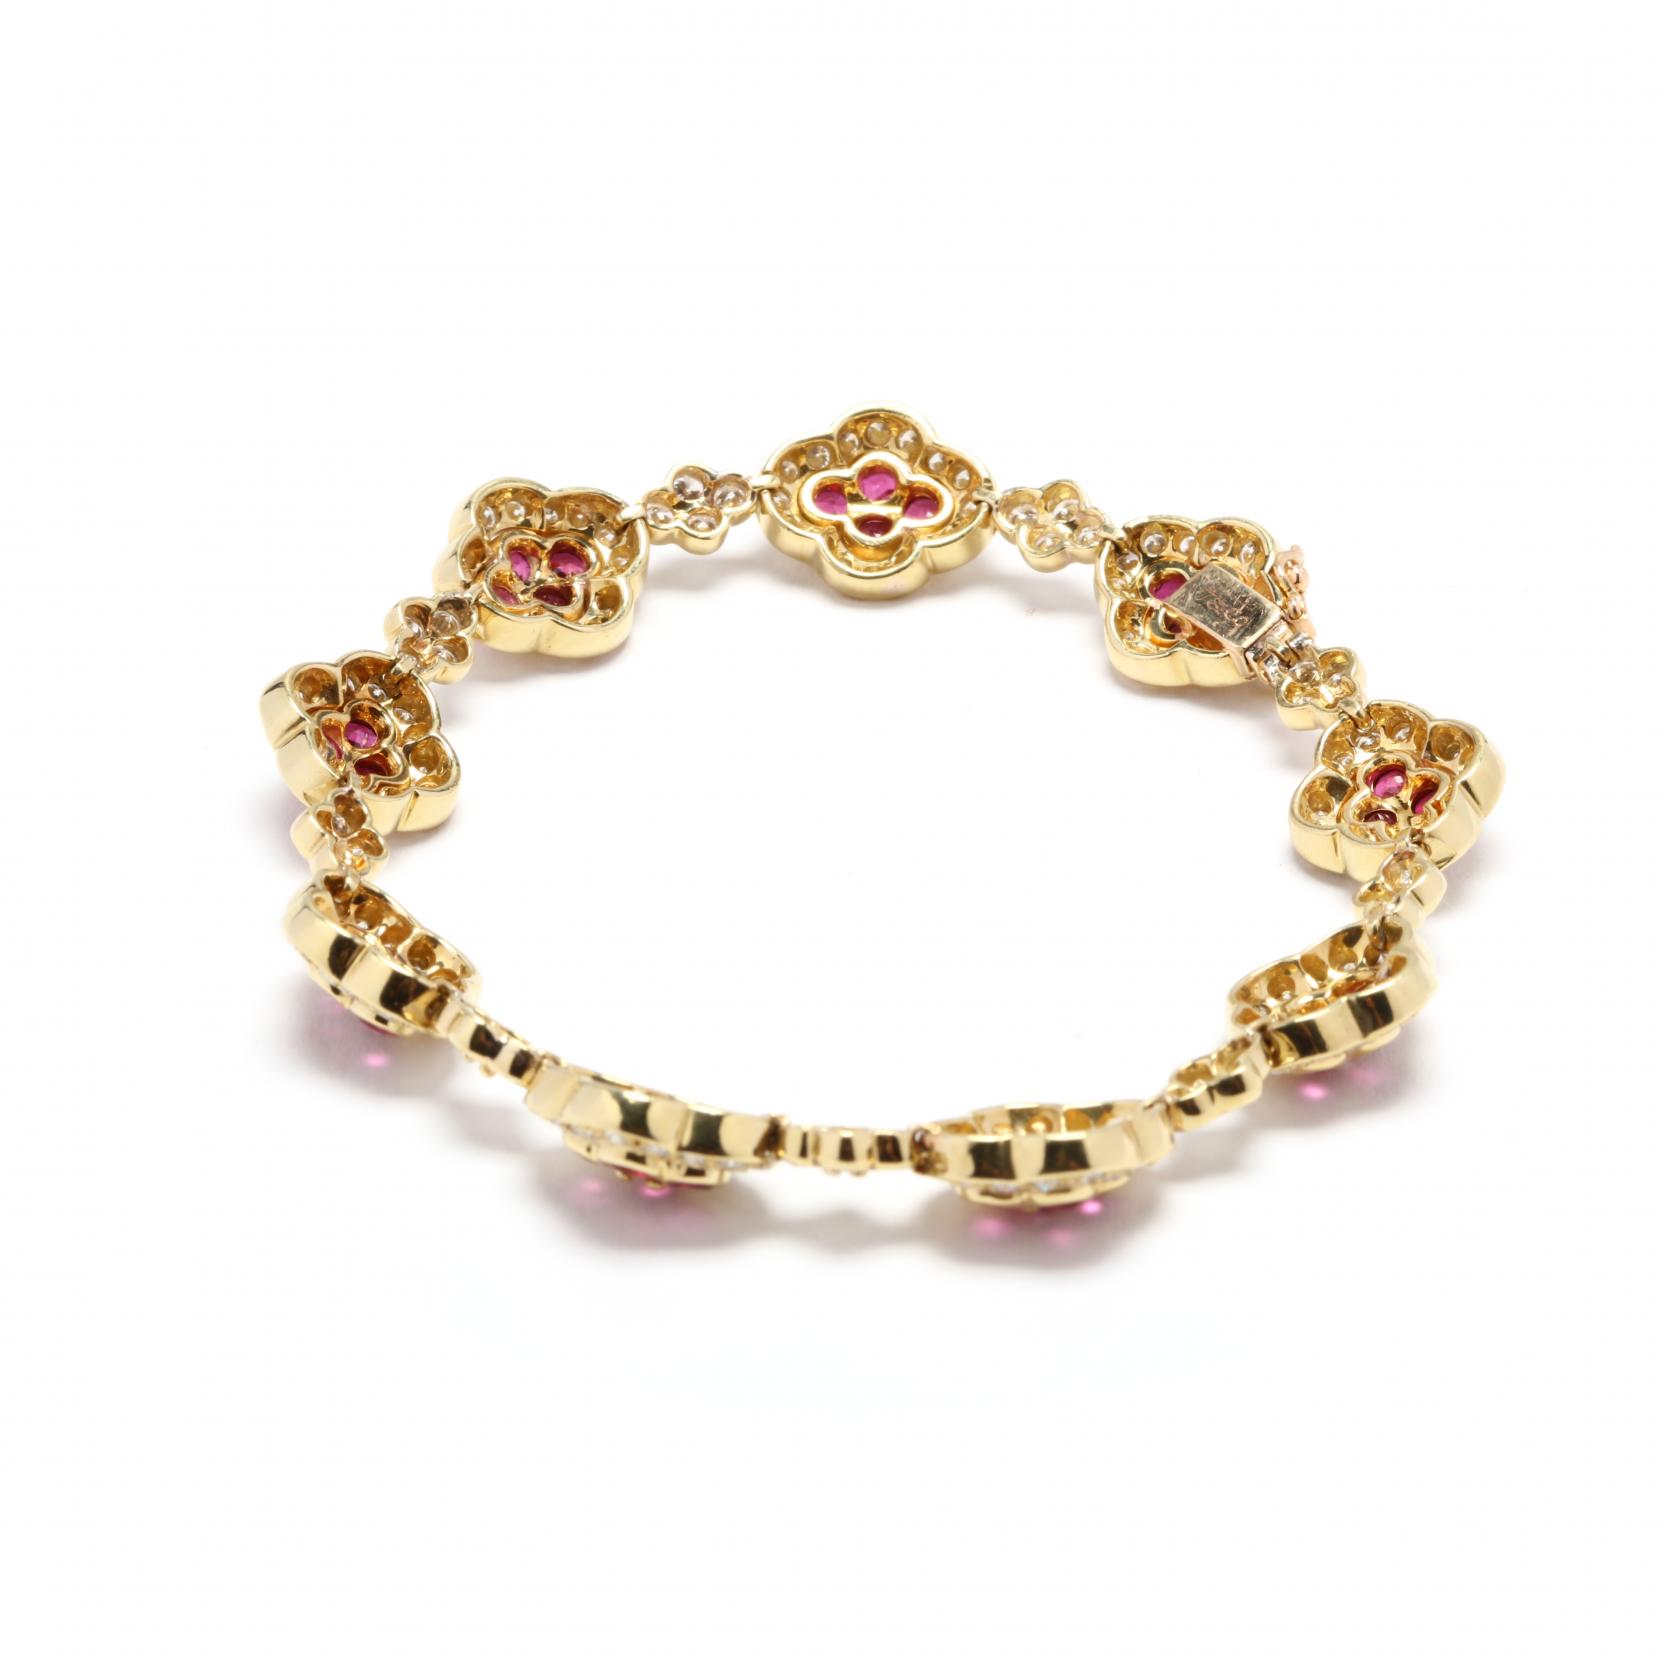 Gold, Diamond, and Ruby Bracelet - Image 3 of 4